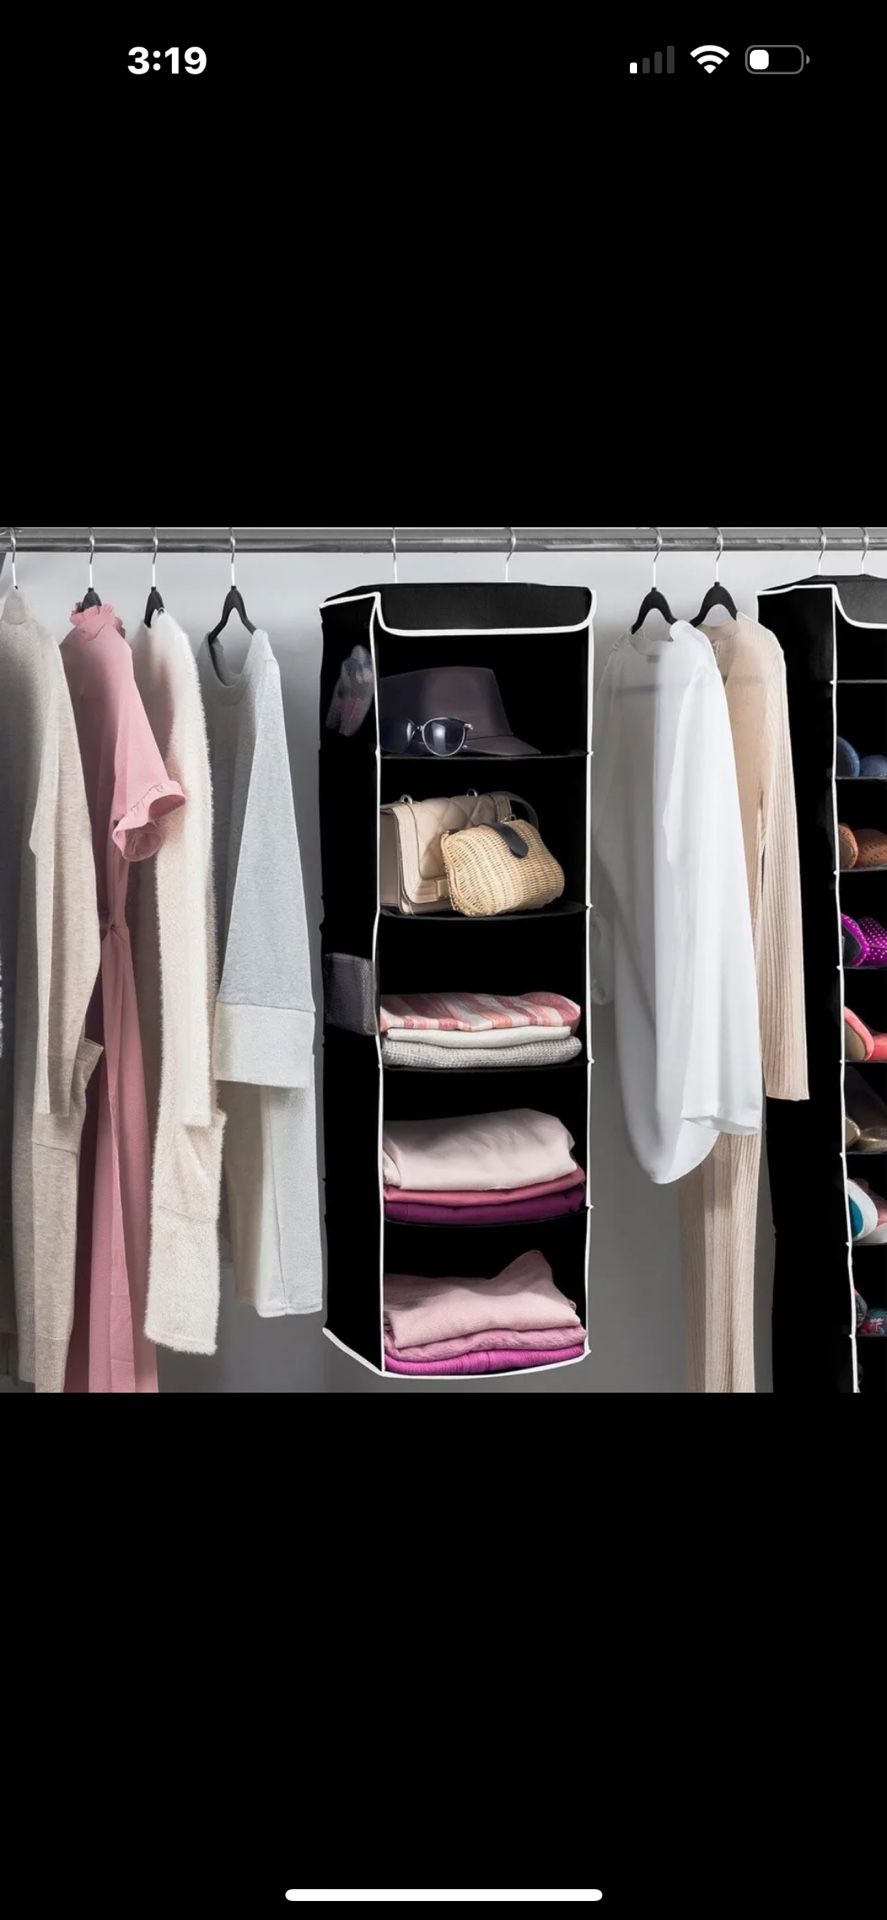 ZOBER 5-Shelf Hanging Closet Organizer - 6 Side Breathable Mesh Pockets